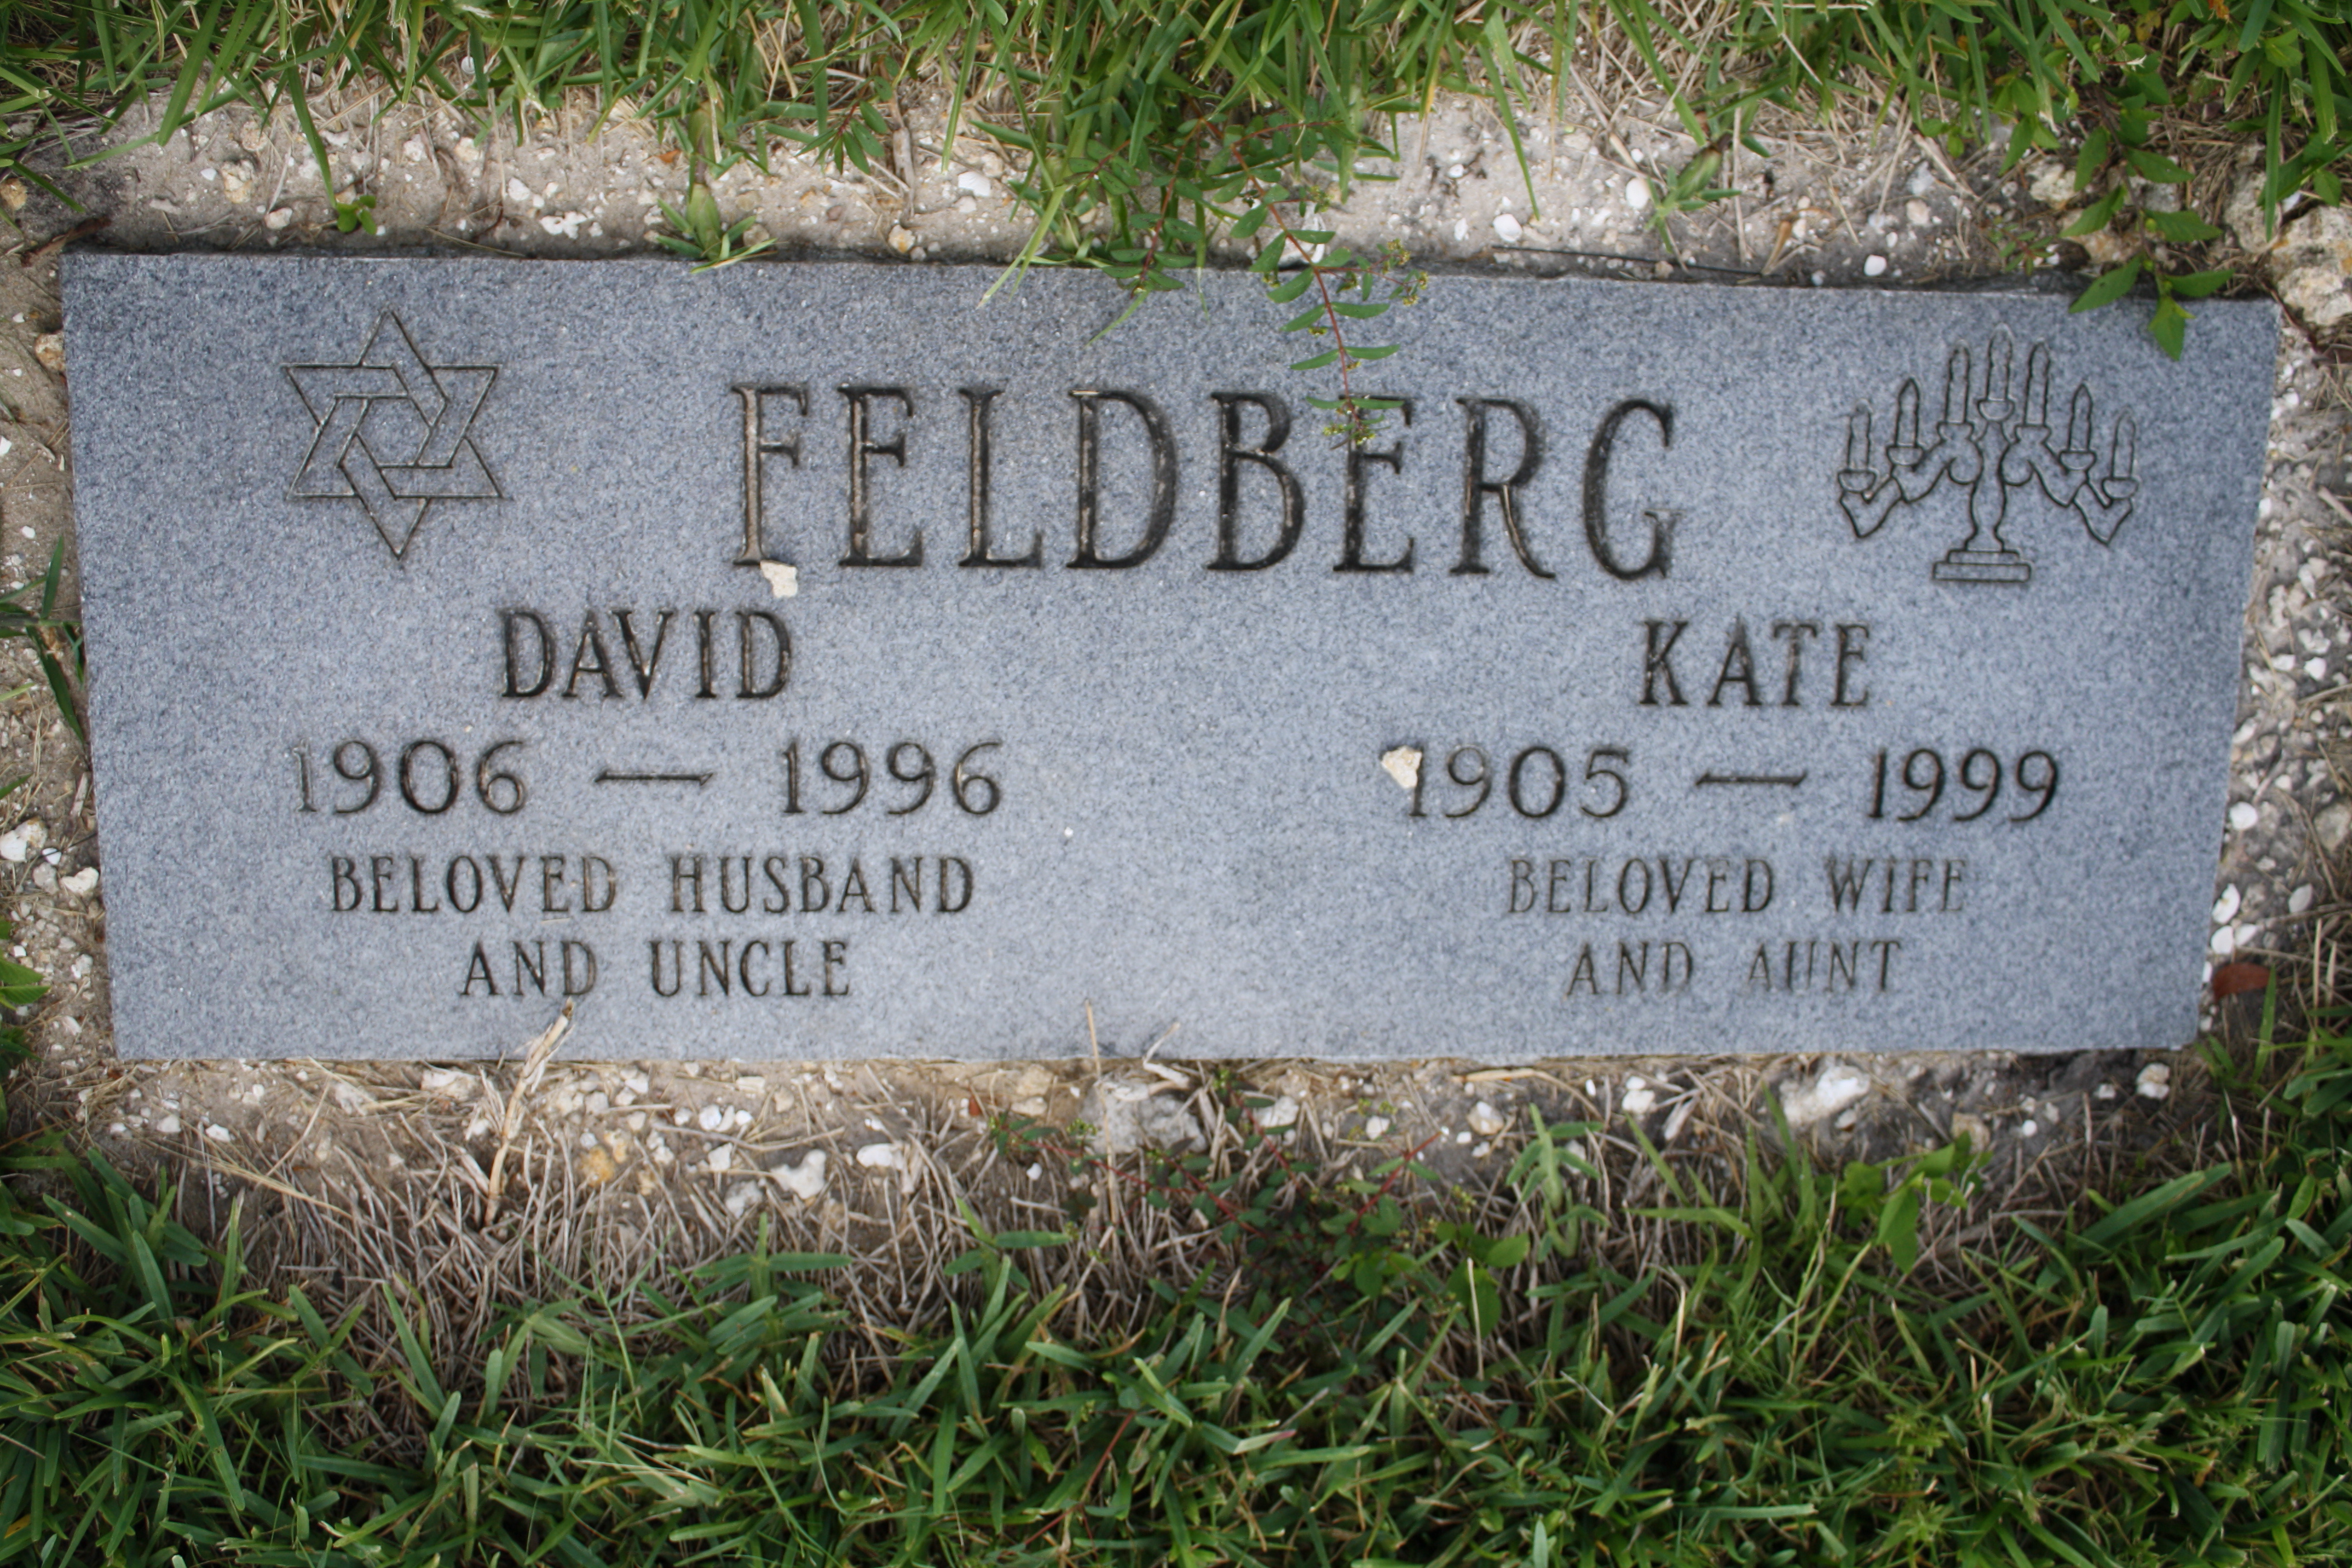 David Feldberg